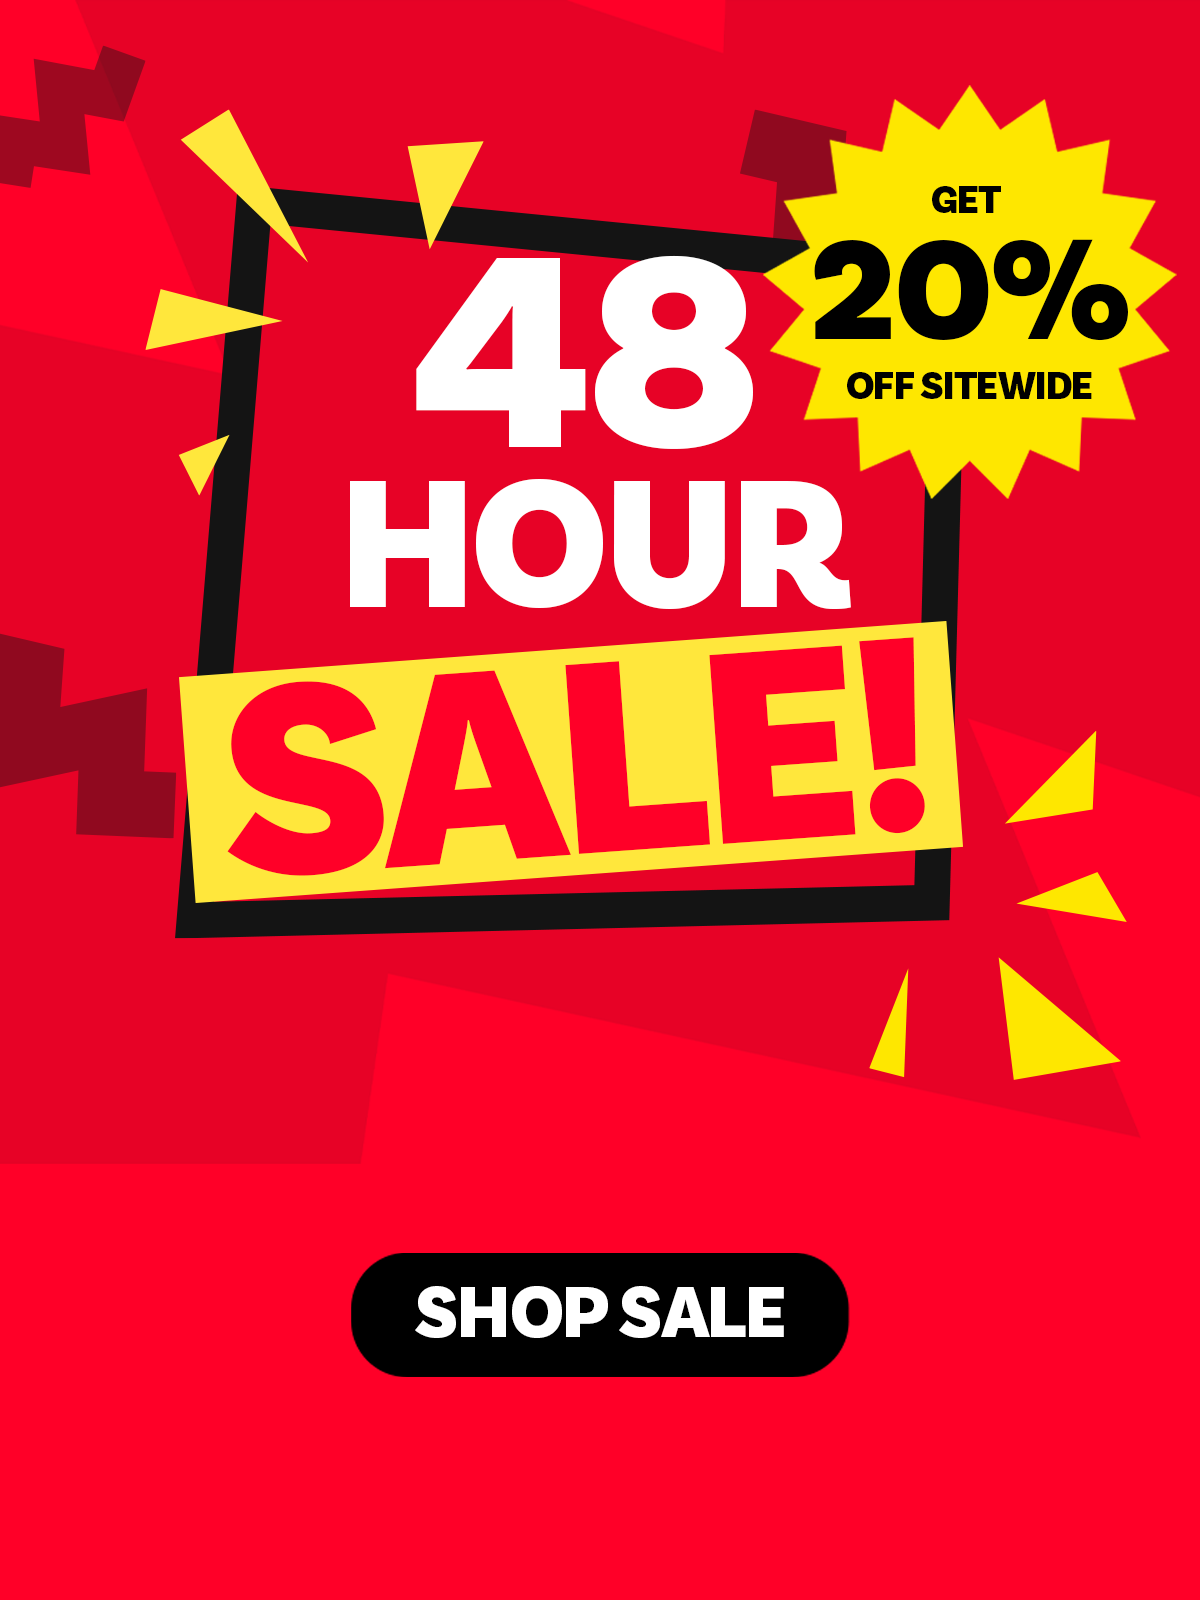 48 Hour Flash Sale - Get 20% Off Sitewide. SHOP SALE